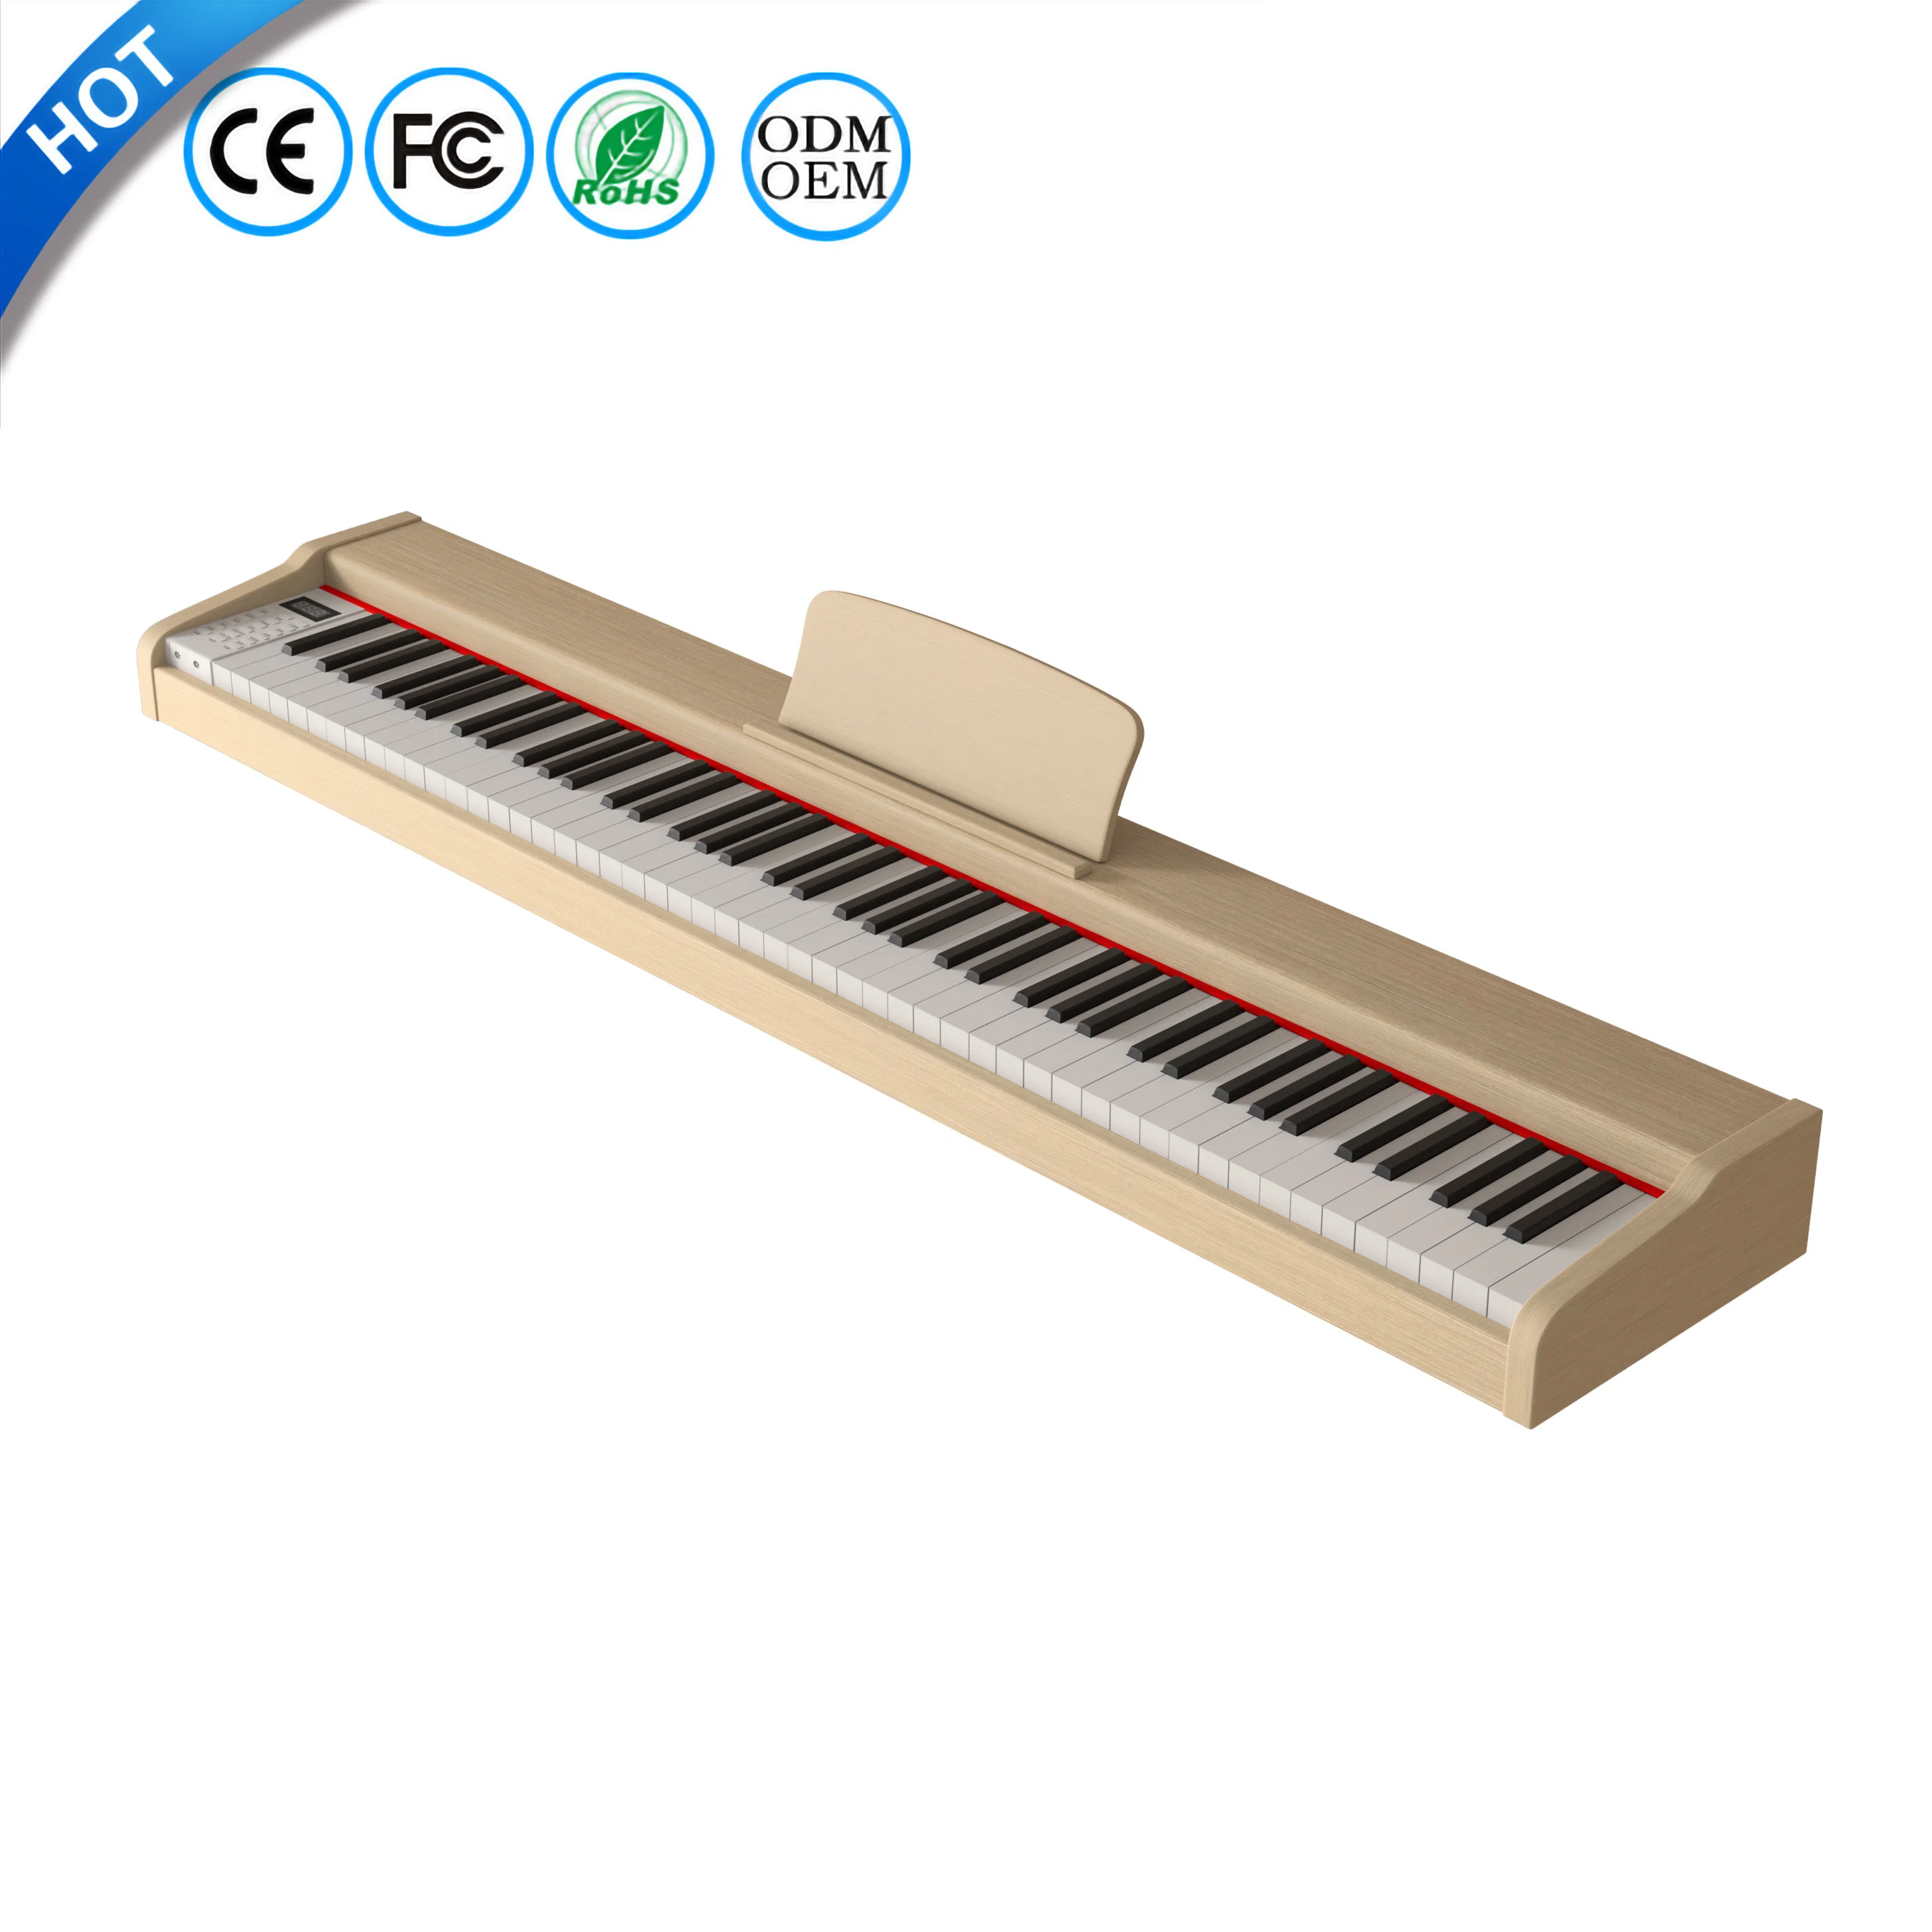 Digital Piano 88 Weighted Keys MIDI контроллер клавиатура вертикально пианино Цена Электрическая OEM Piano клавиатура